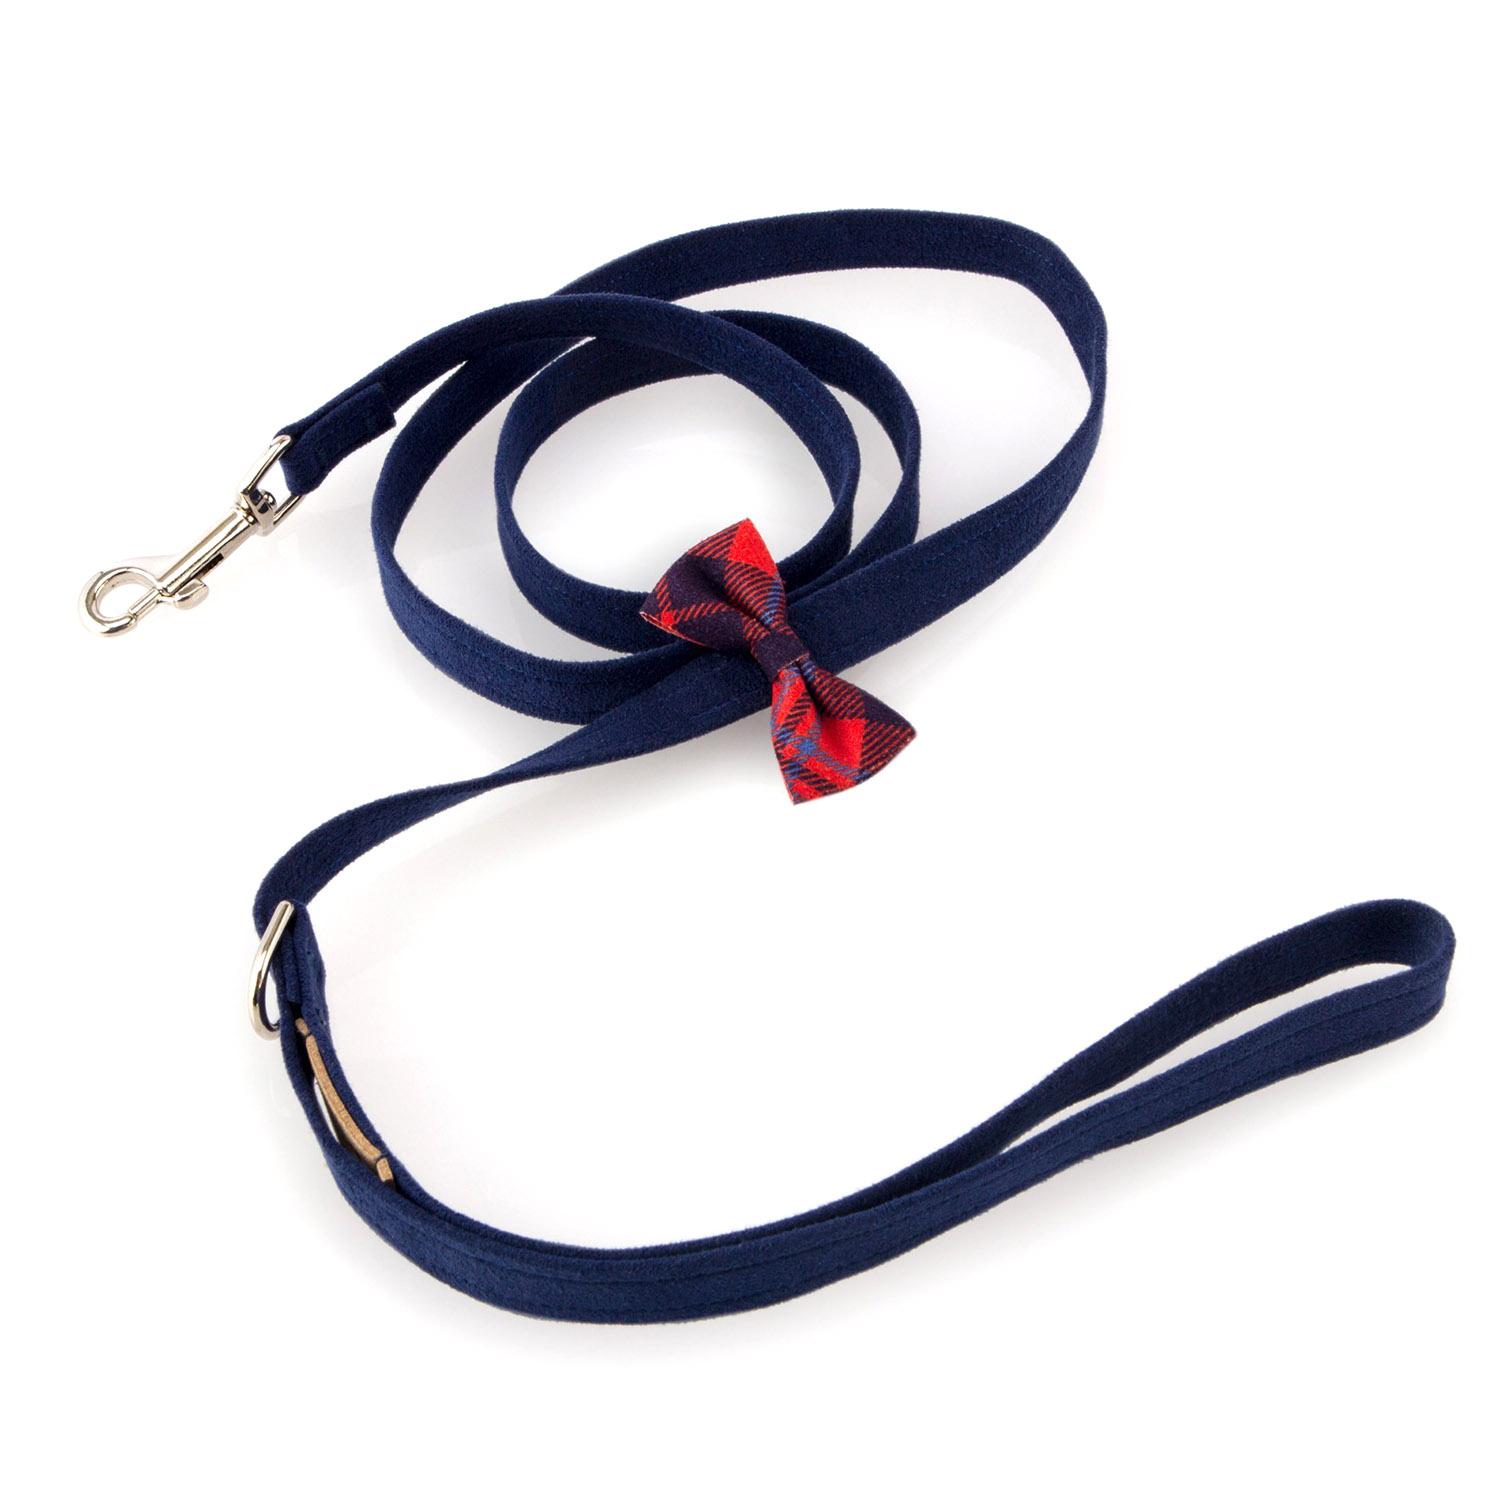 Scotty Bow Tie Dog Leash by Susan Lanci - Navy with Chestnut Plaid